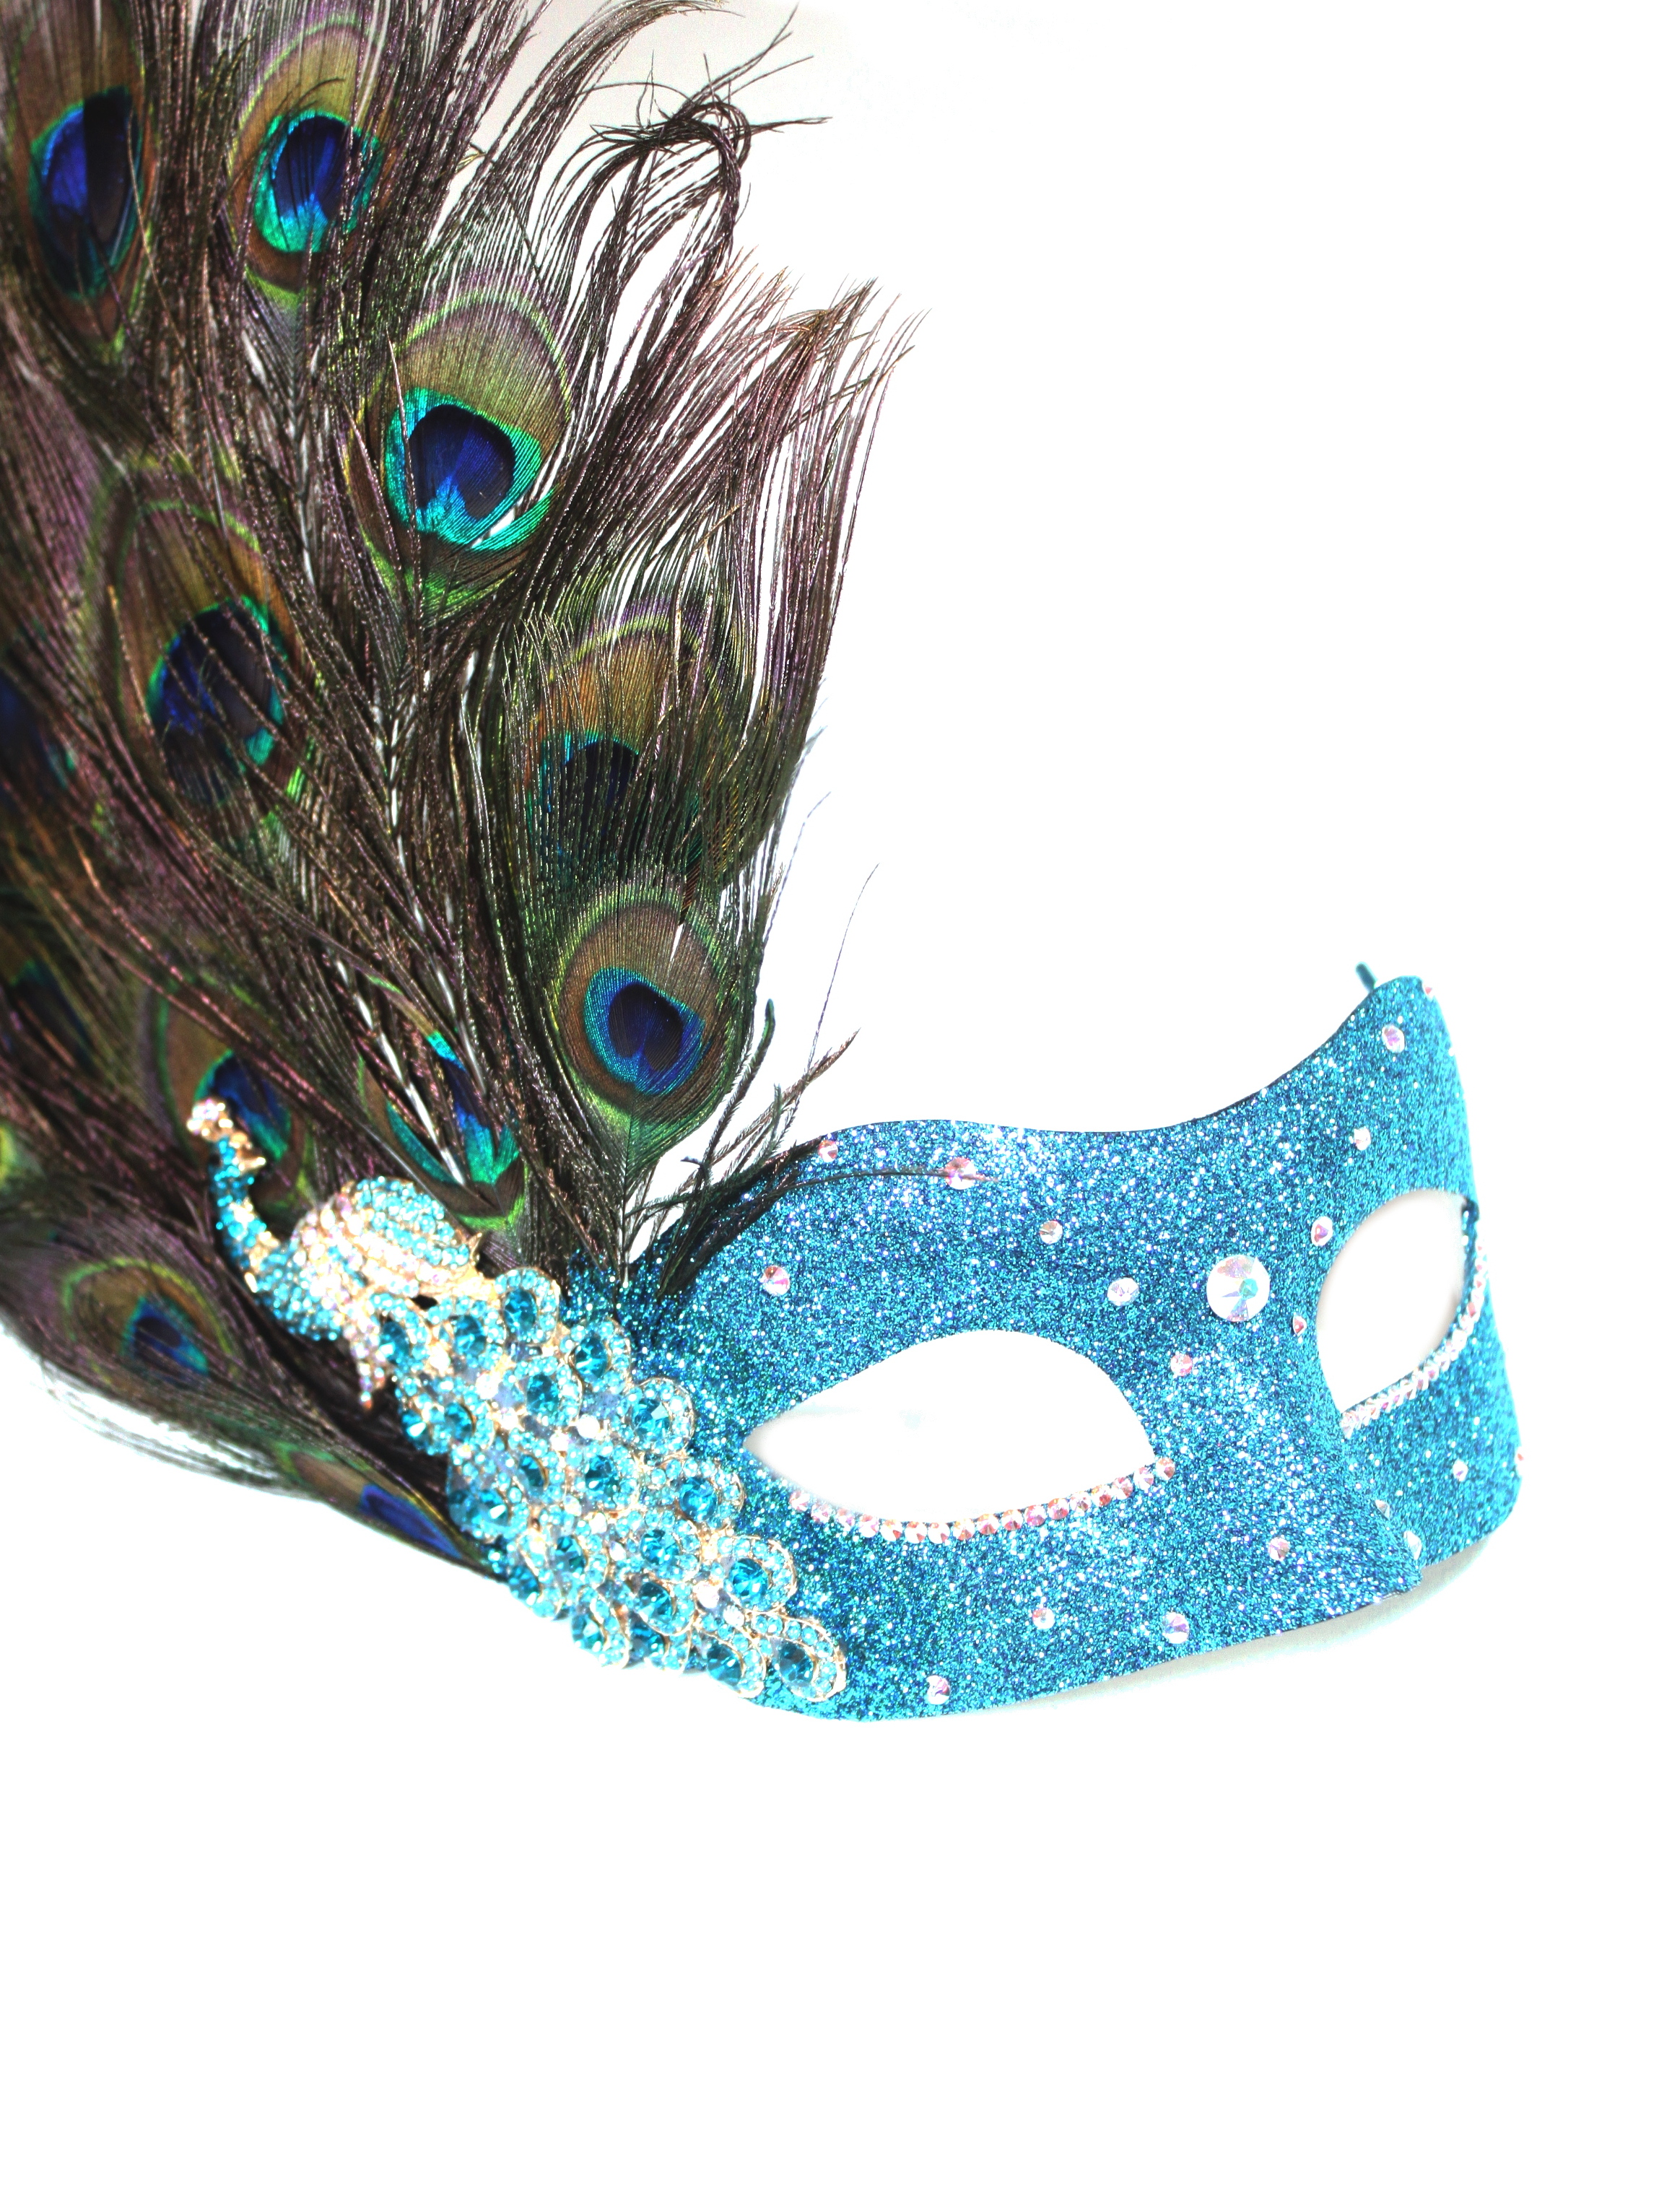 Peacock inspired mask